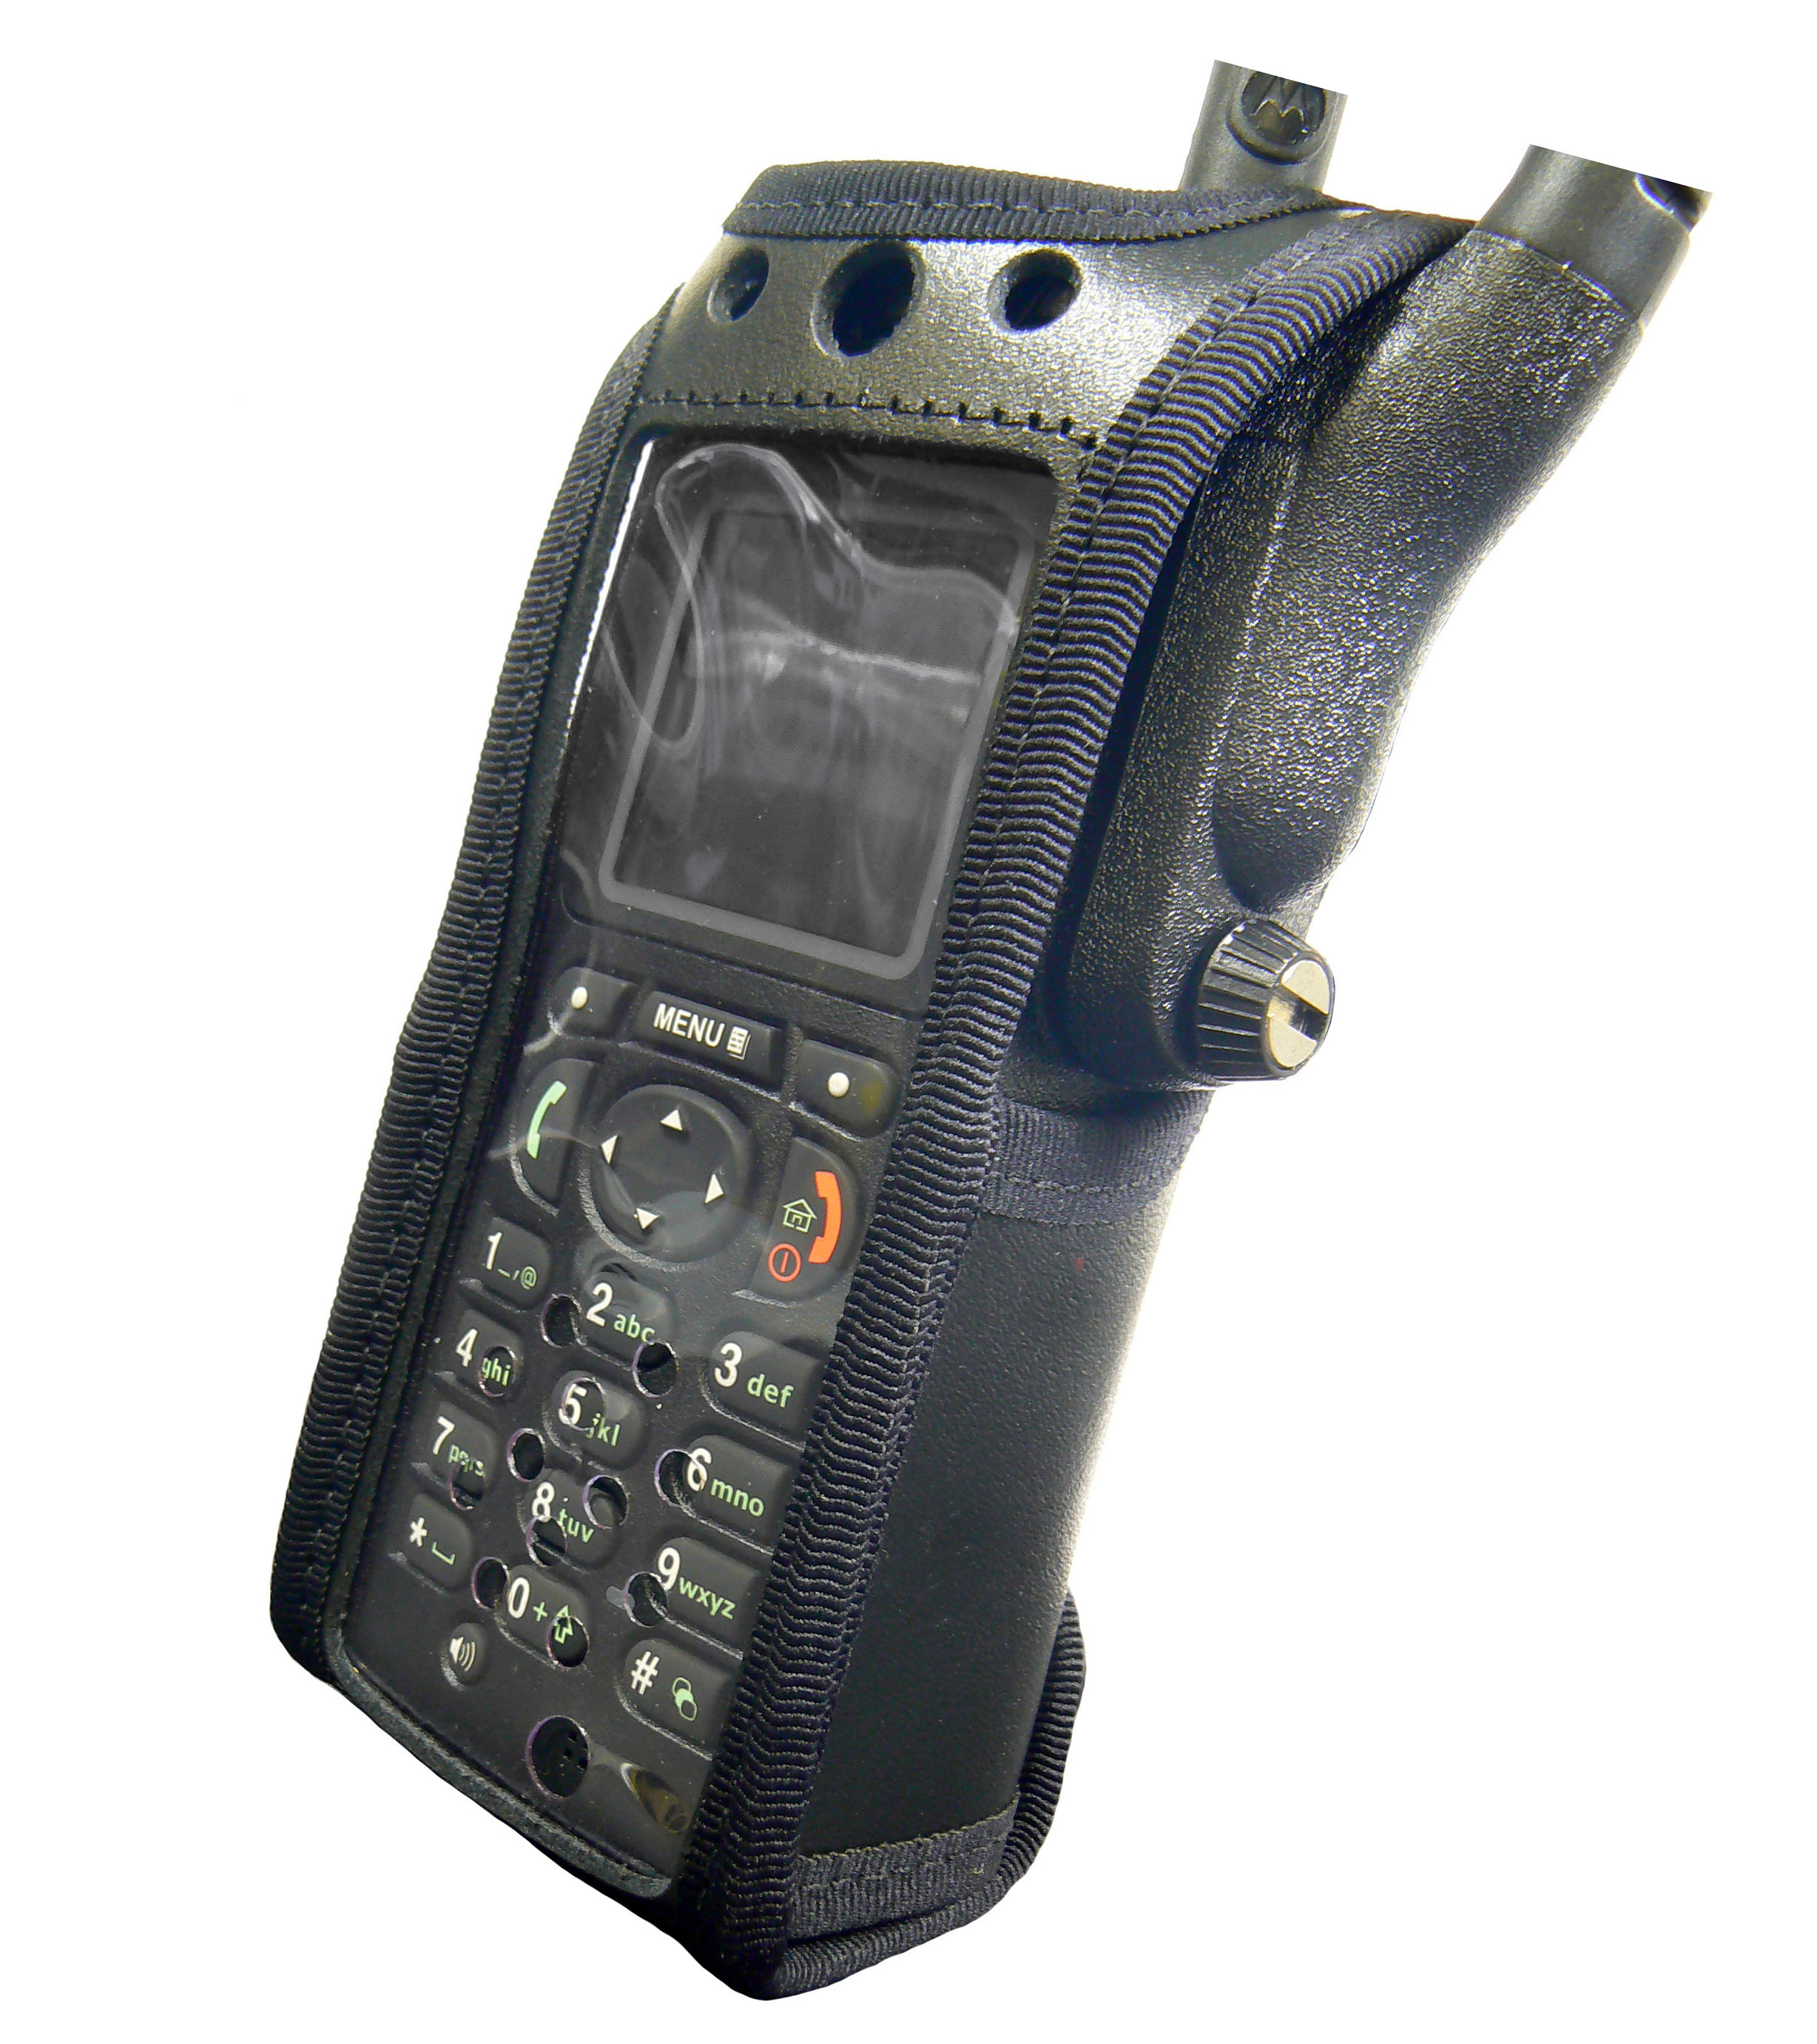 Motorola MTP850 FUG Tetra Radio Case Leather with Click-On